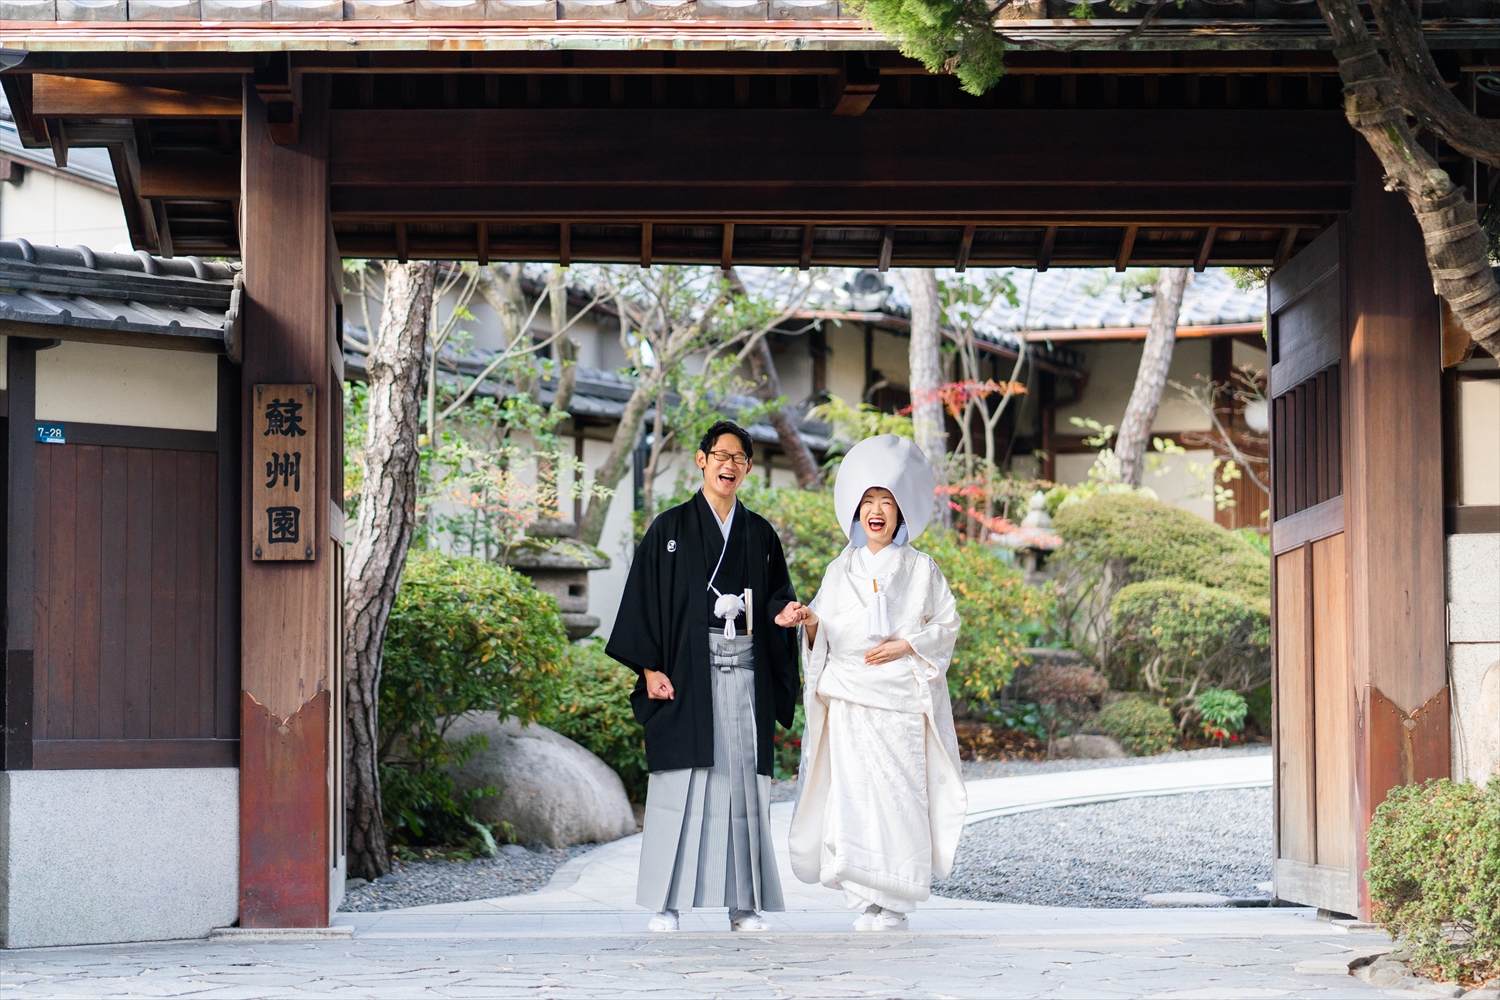 神戸結婚式の写真撮影 映像撮影 結婚式ビデオ撮影 写真撮影なら月山映像へ 大阪 神戸 京都